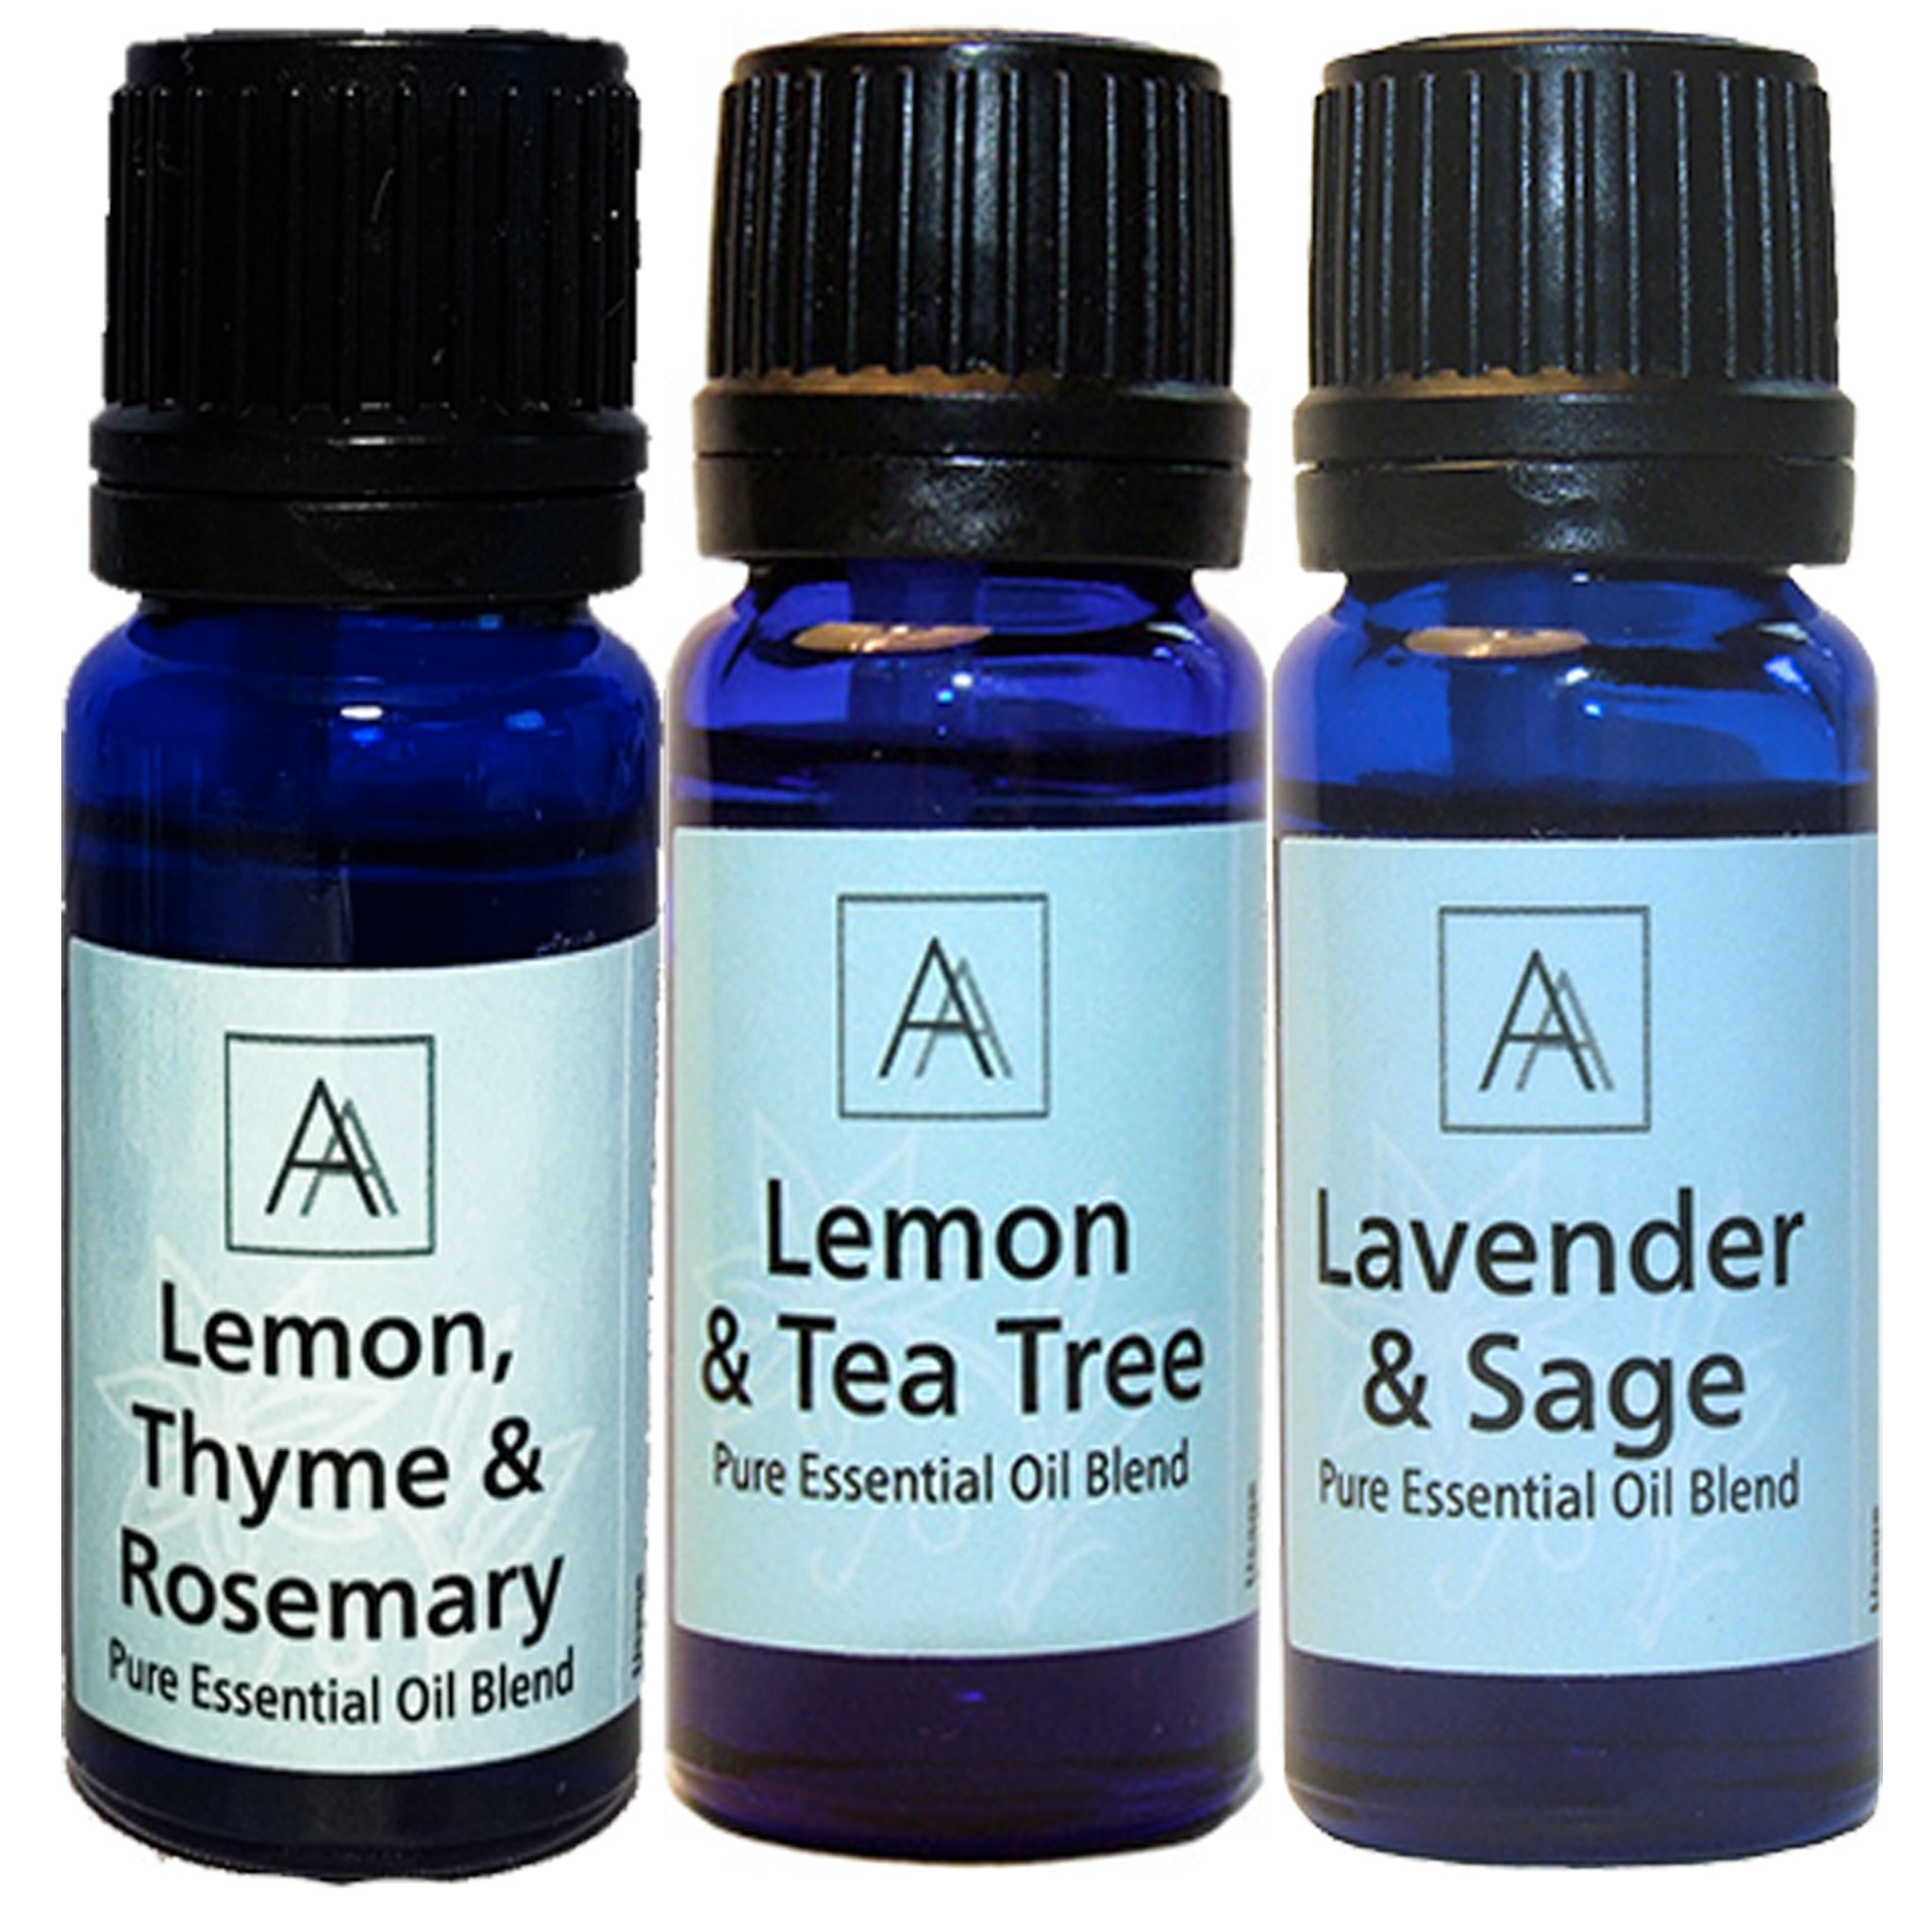 Lavender & Sage, Lemon & Tea Tree, Lemon, Thyme & Rosemary